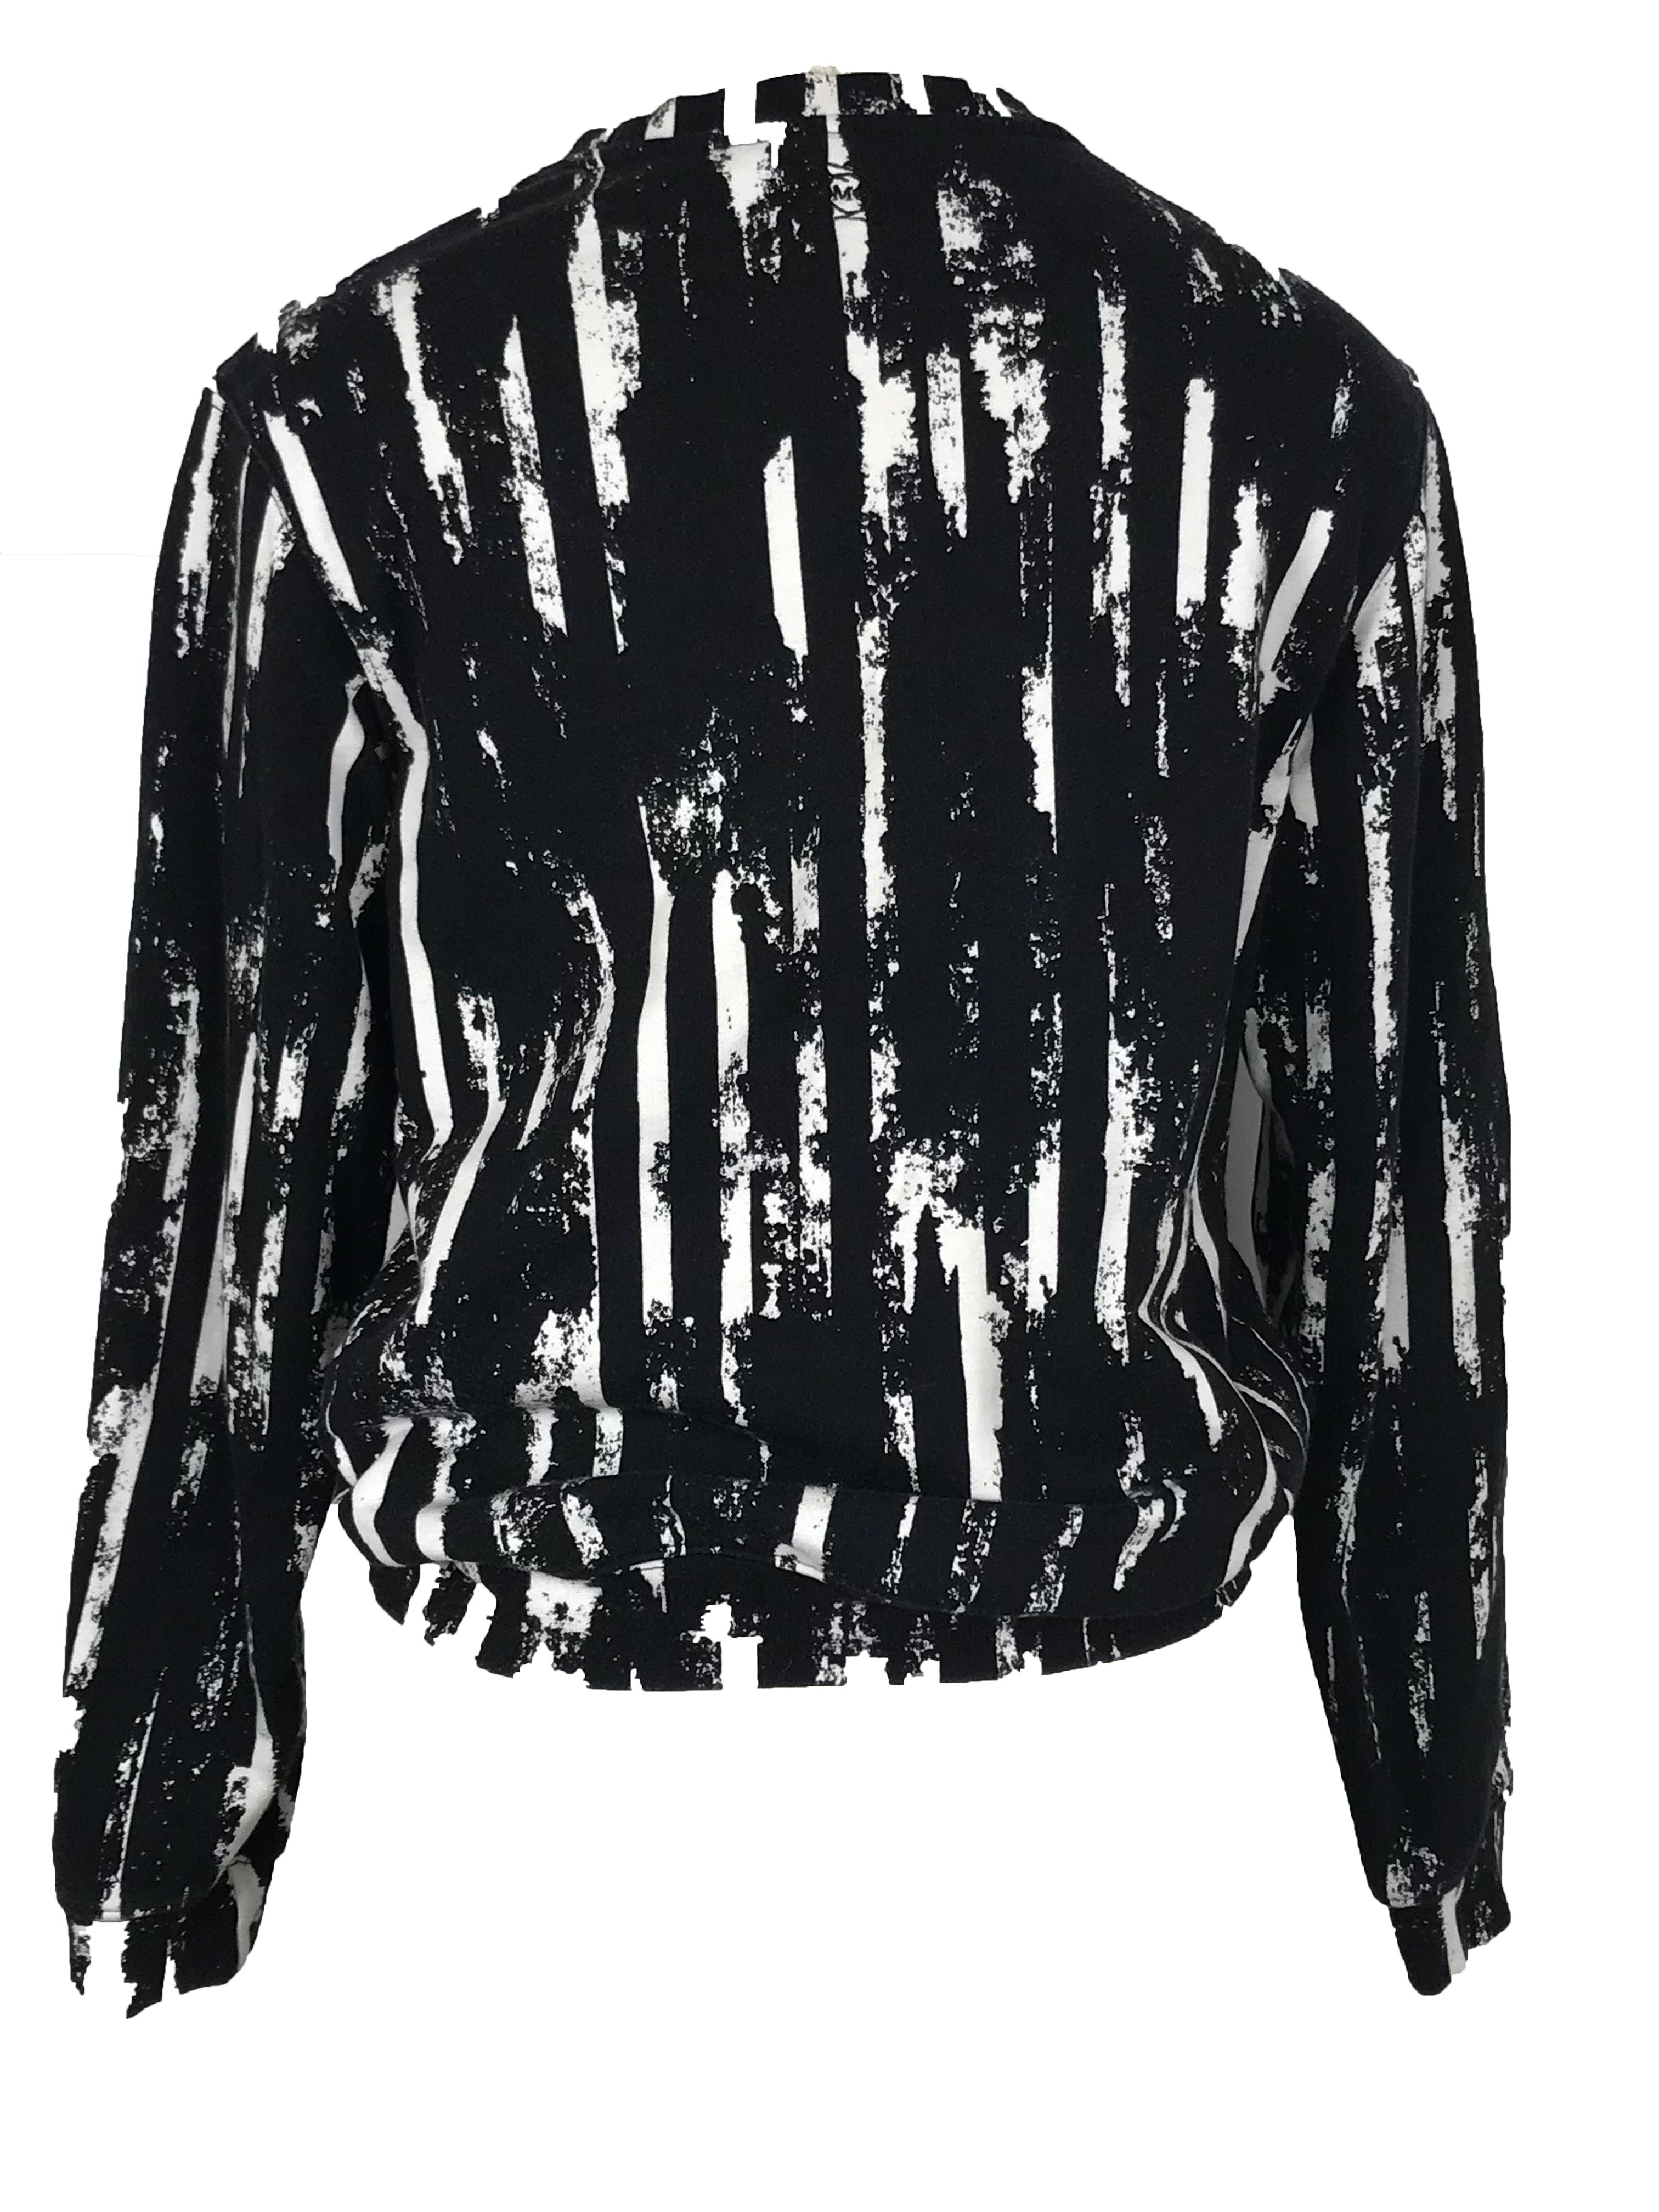 Alexander McQueen Black and White Patterned Crewneck Sweatshirt Size M